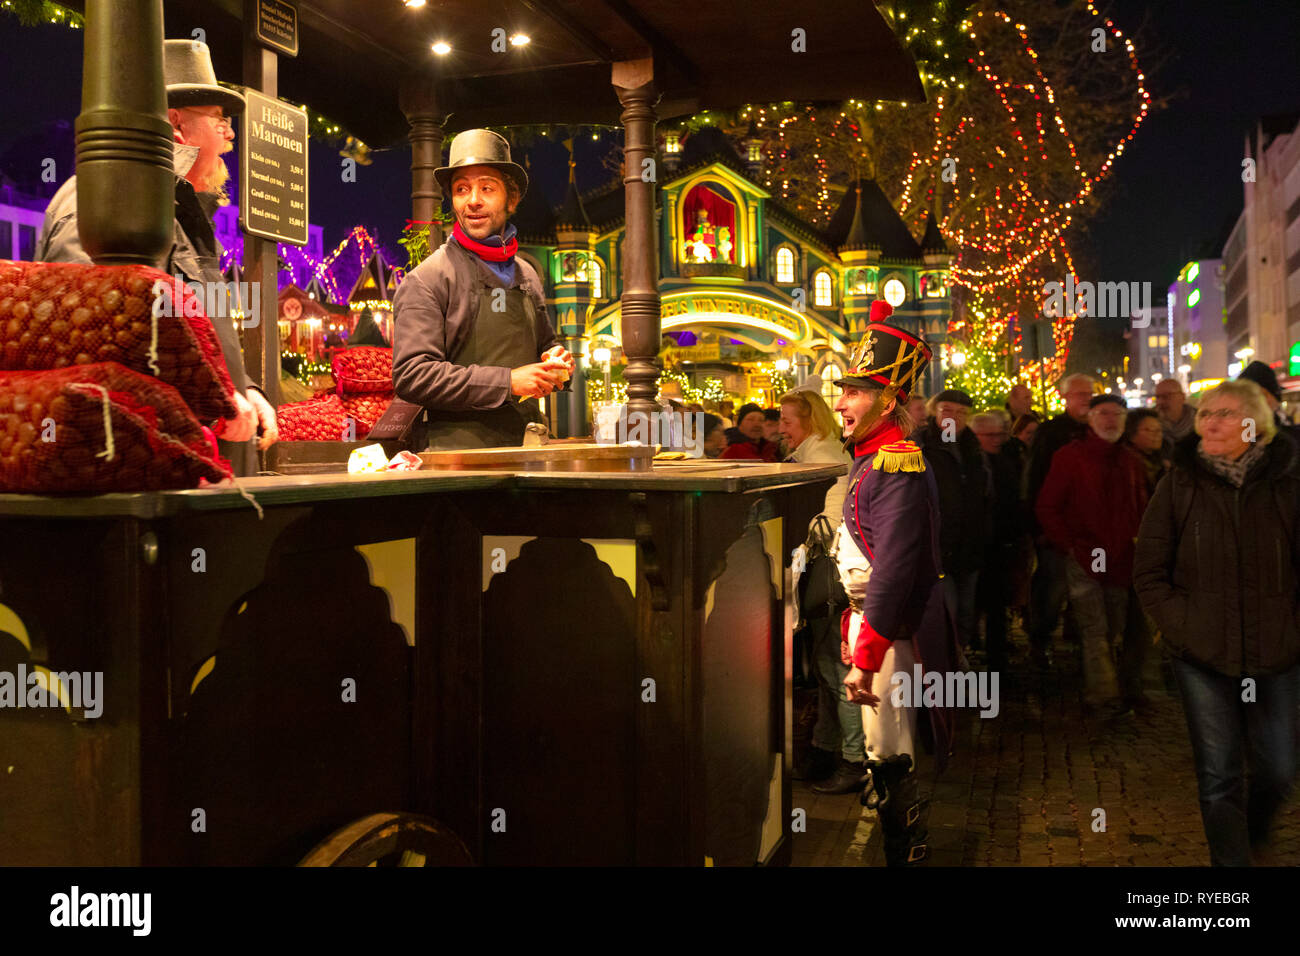 Roasted Chestnut Vendors, Cologne Christmas Market, Cologne, Germany, Europe Stock Photo